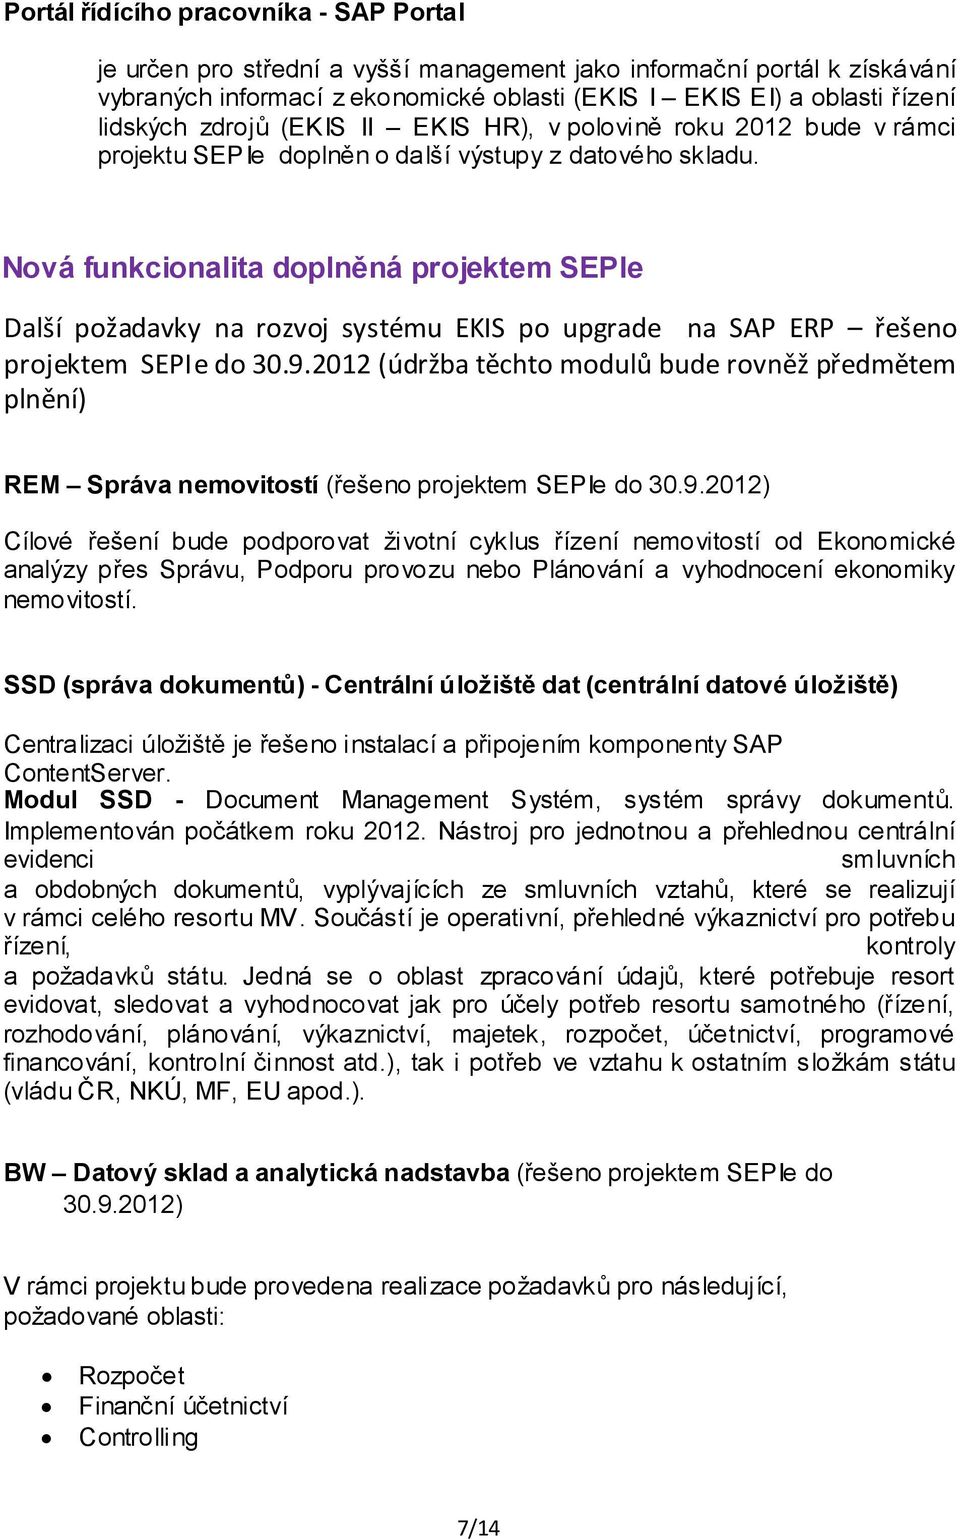 Nová funkcionalita doplněná projektem SEPIe Další požadavky na rozvoj systému EKIS po upgrade na SAP ERP řešeno projektem SEPIe do 30.9.